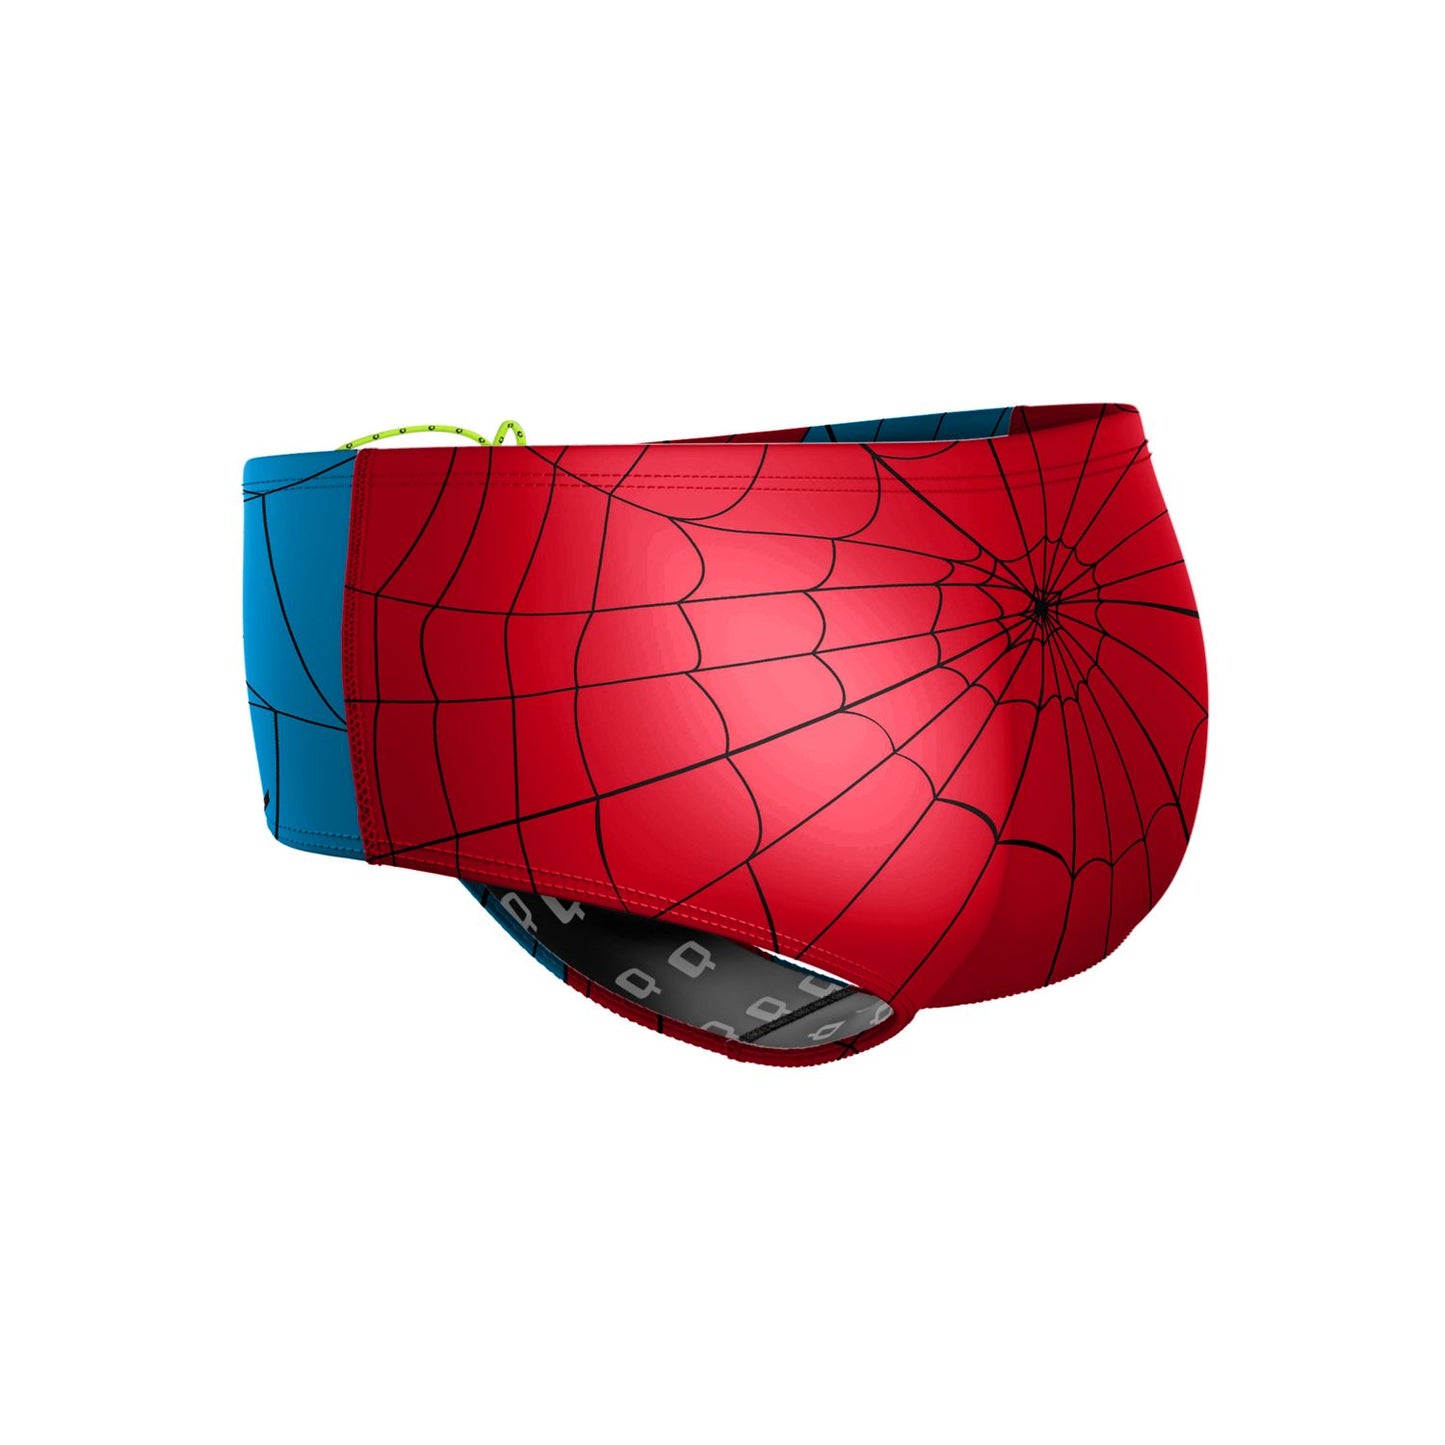 Spider 2.0 Swimmer Classic Brief Swimsuit